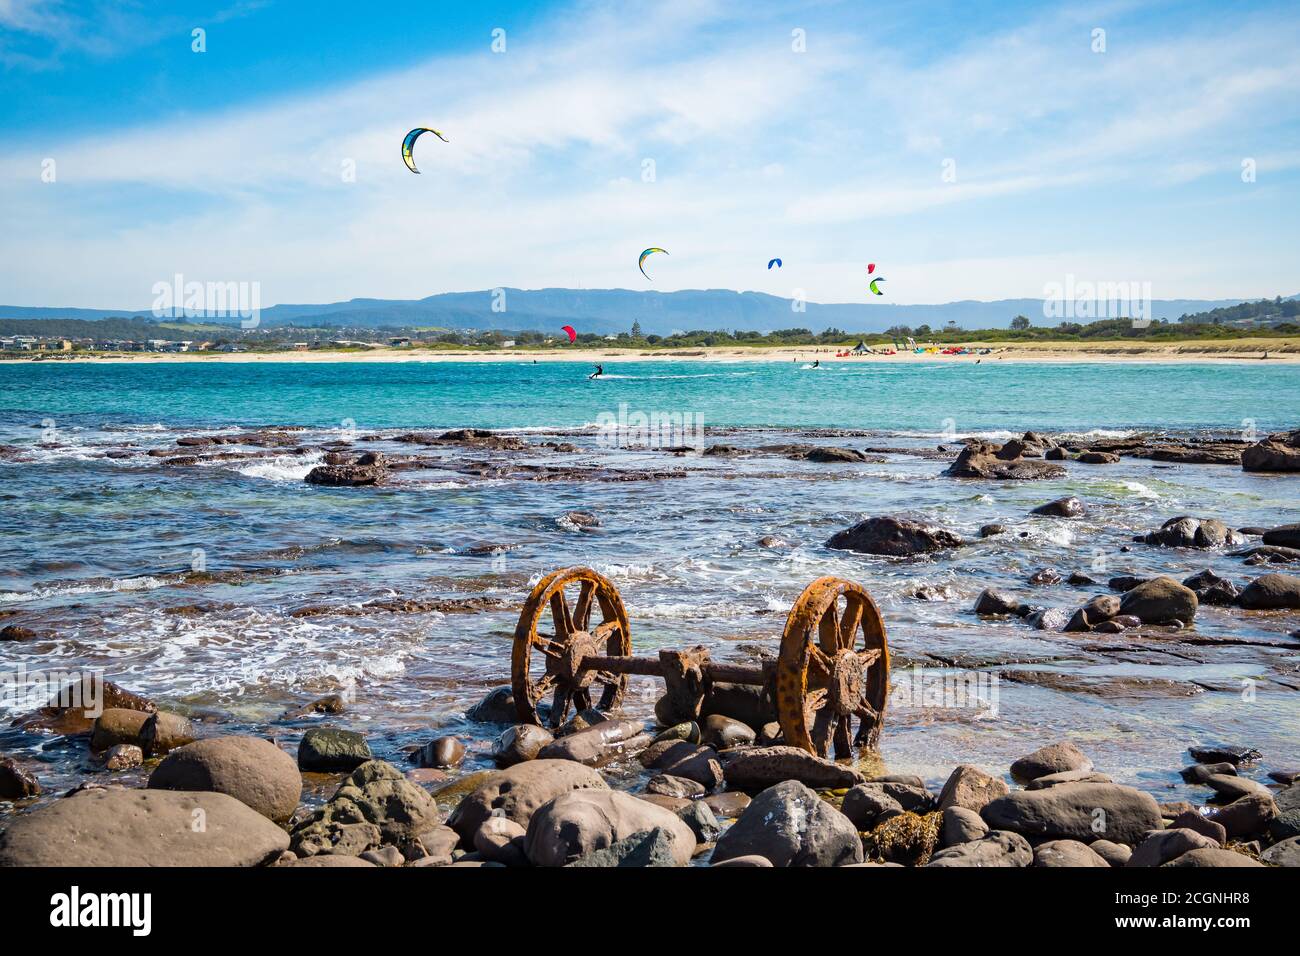 Kite Surfing of Windang Island Stock Photo